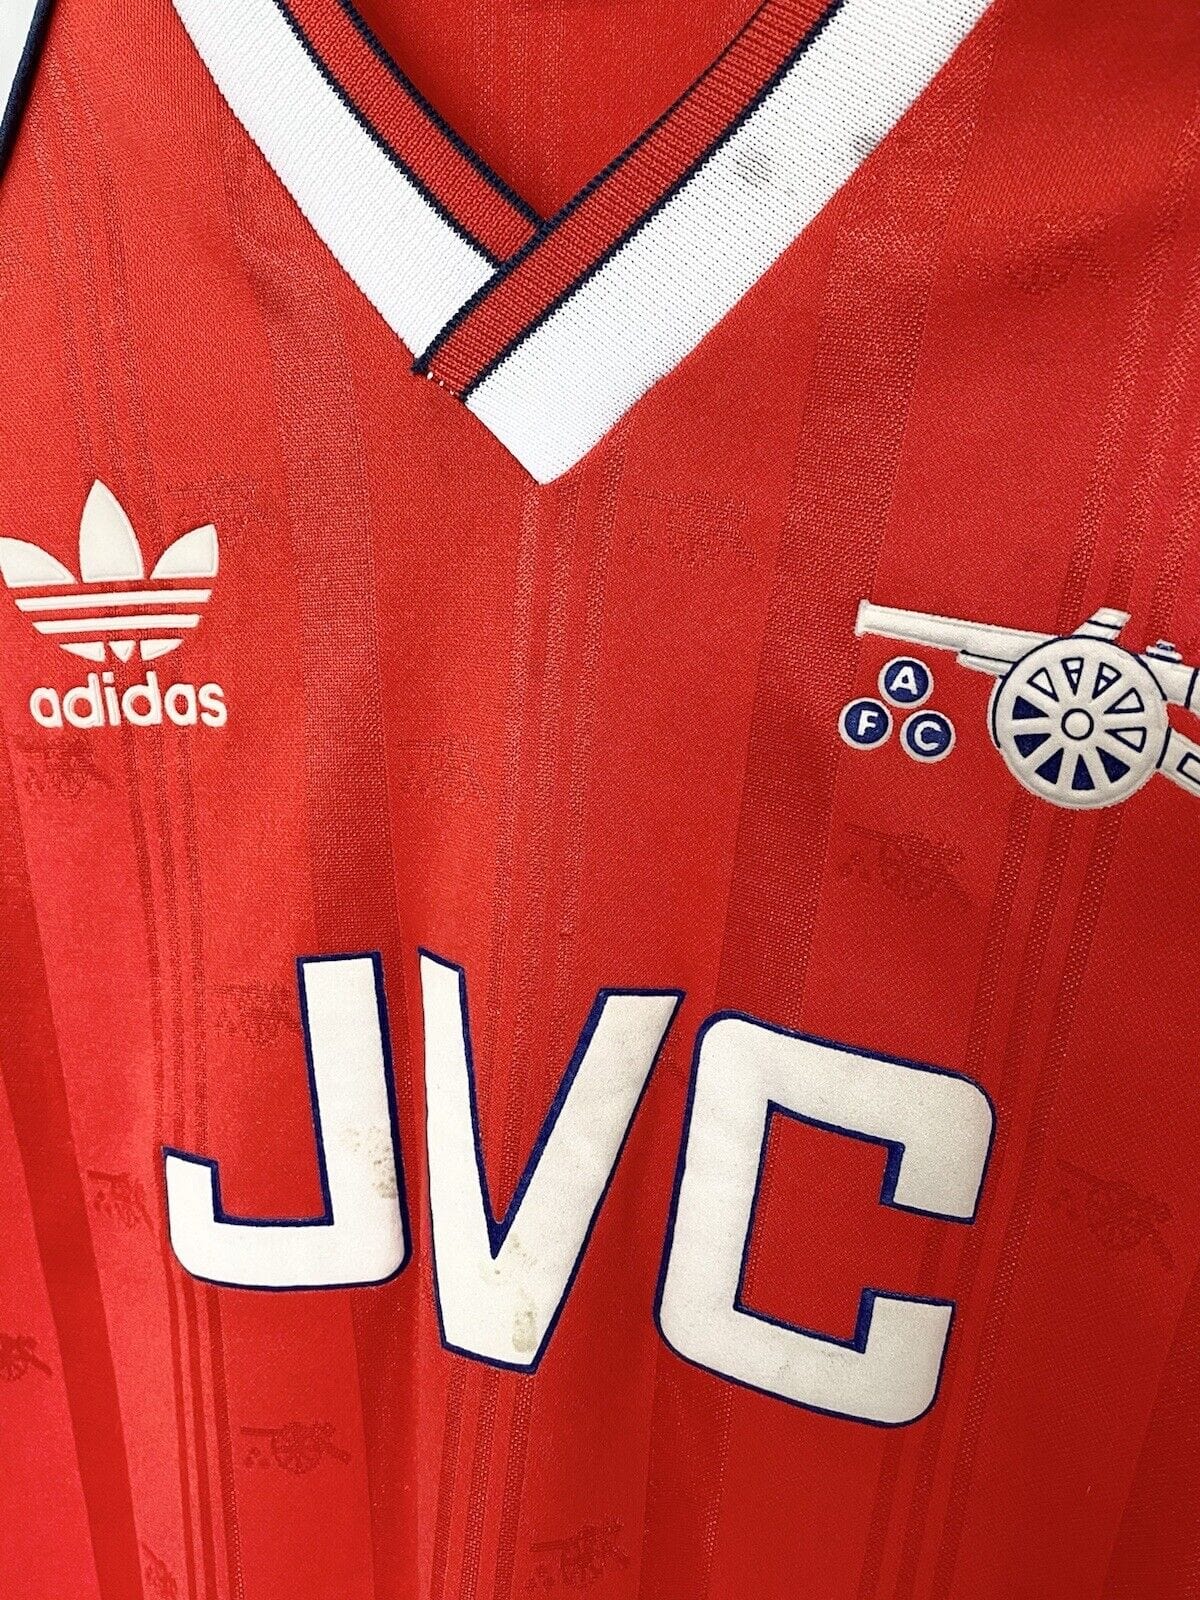 Old Arsenal Football Shirts / Vintage Official Gunners Football